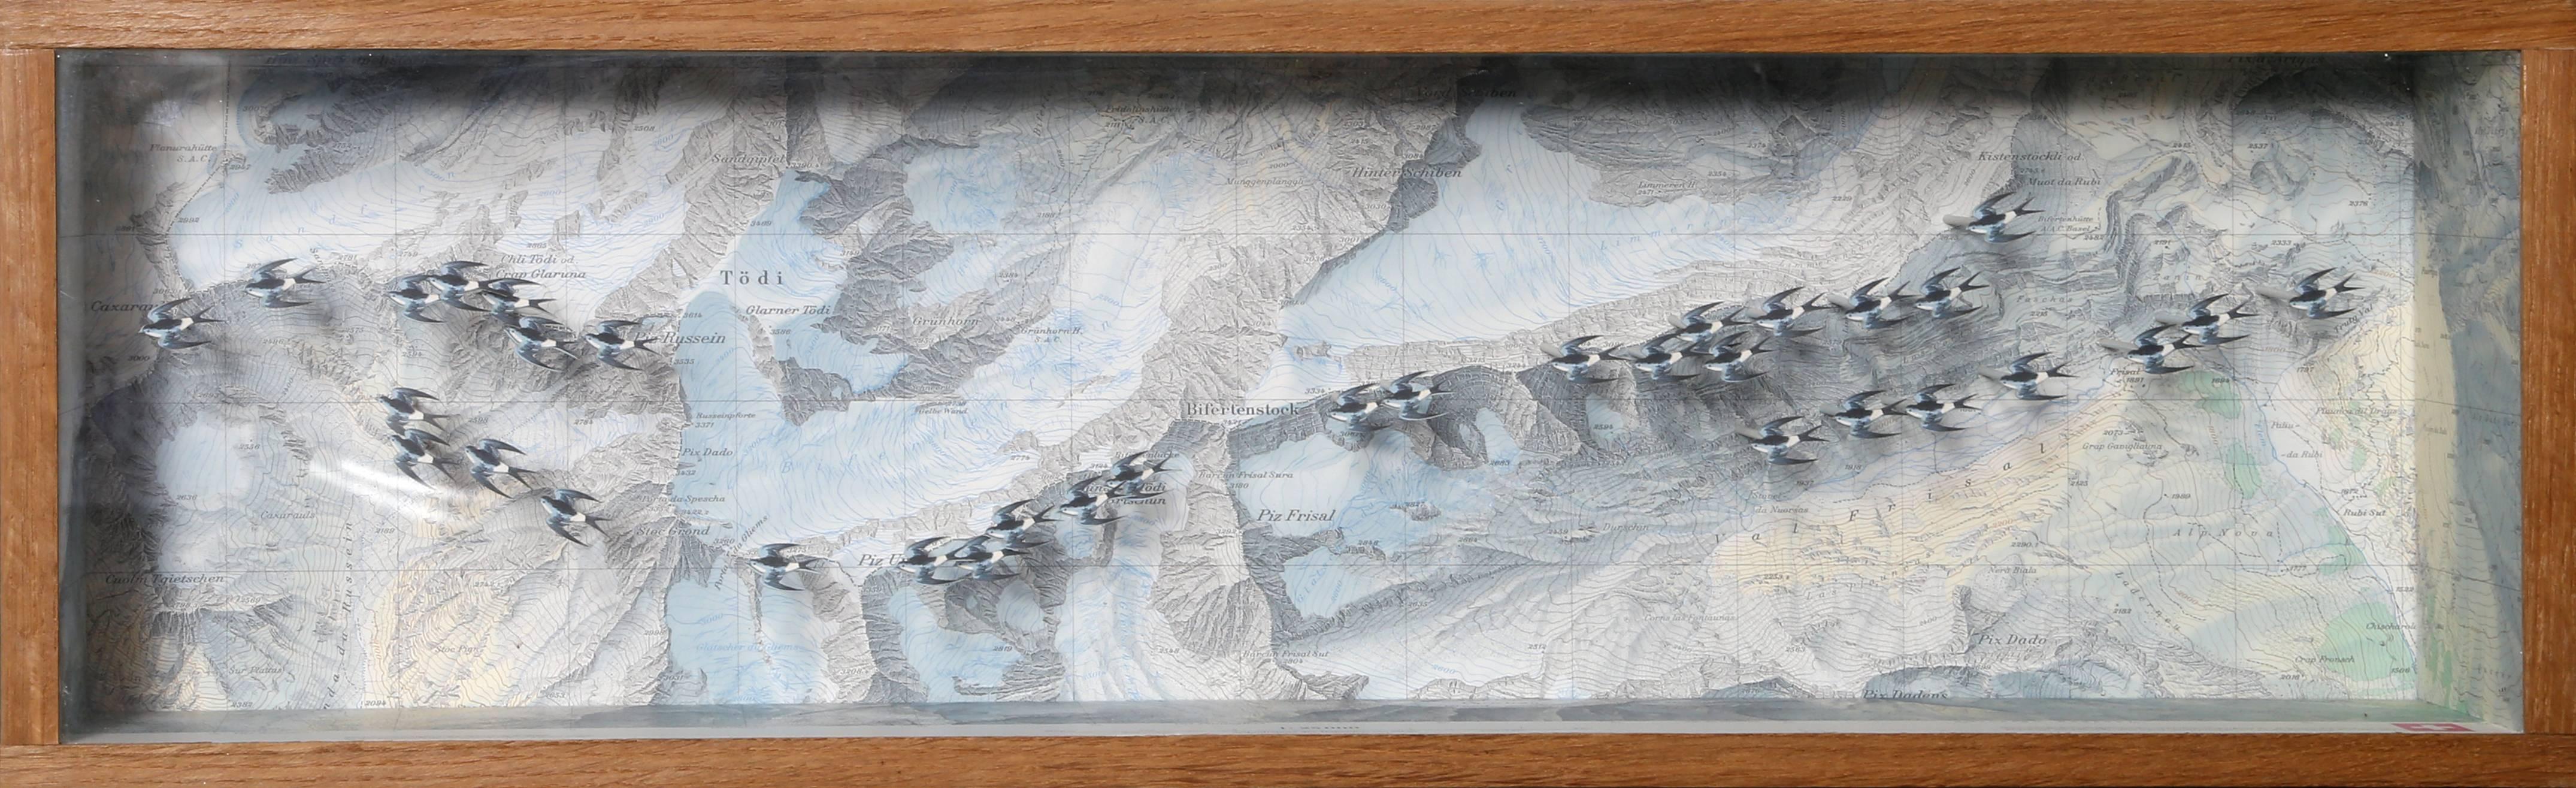 High Trail, 3-D Diorama Box - Mixed Media Art by James Dilnot